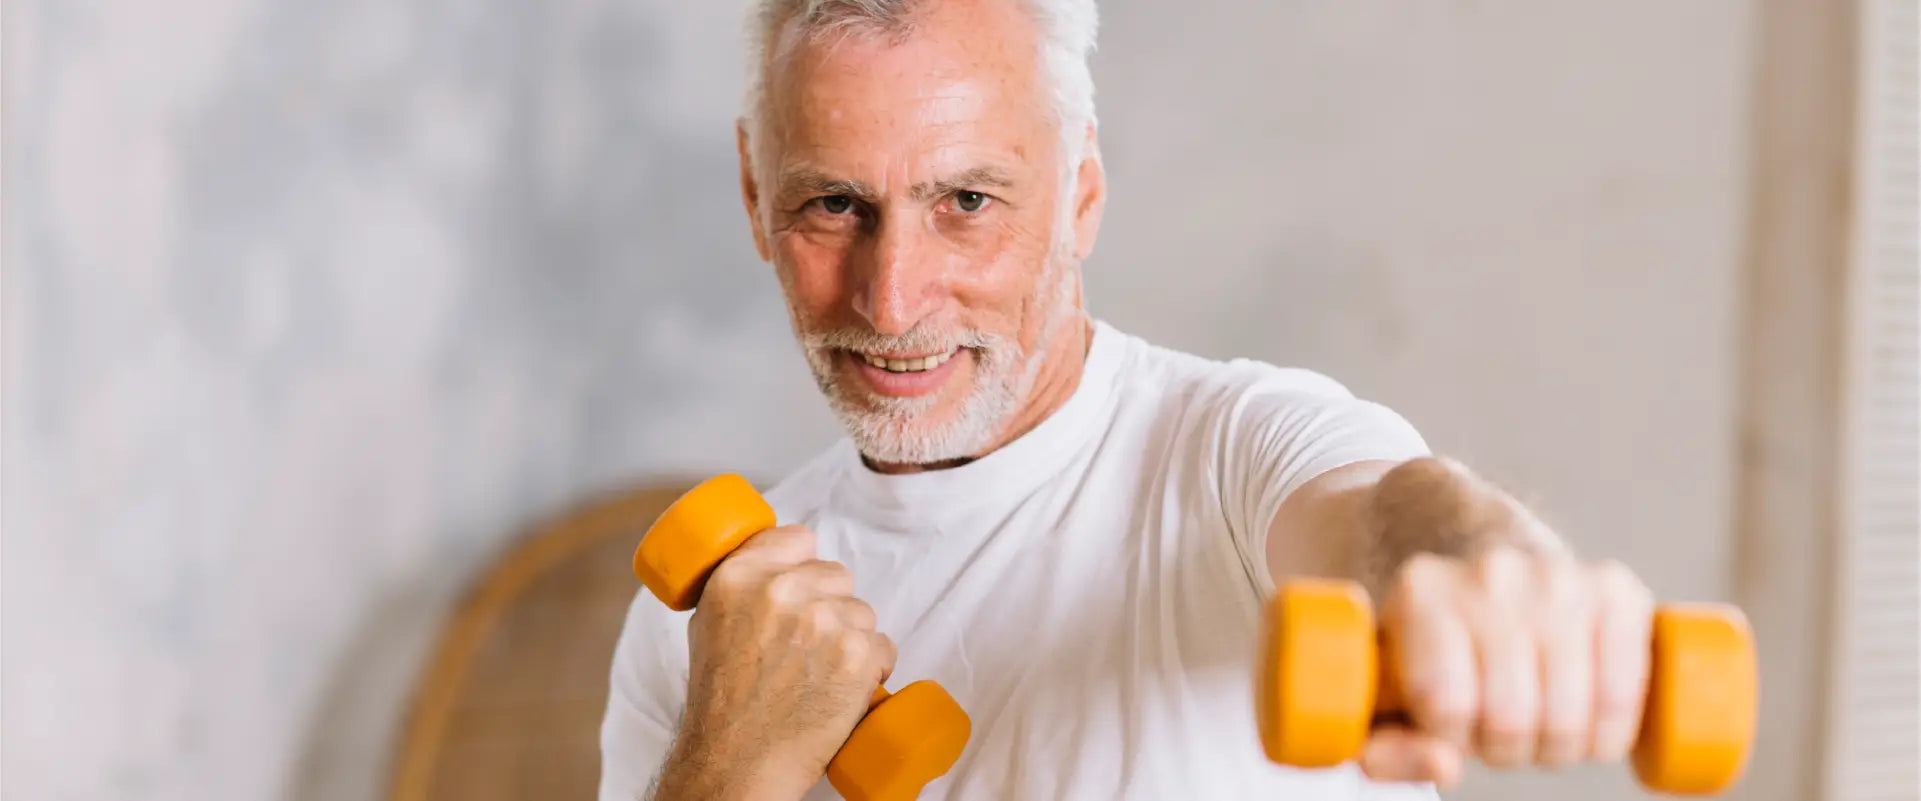 Bone and muscle health